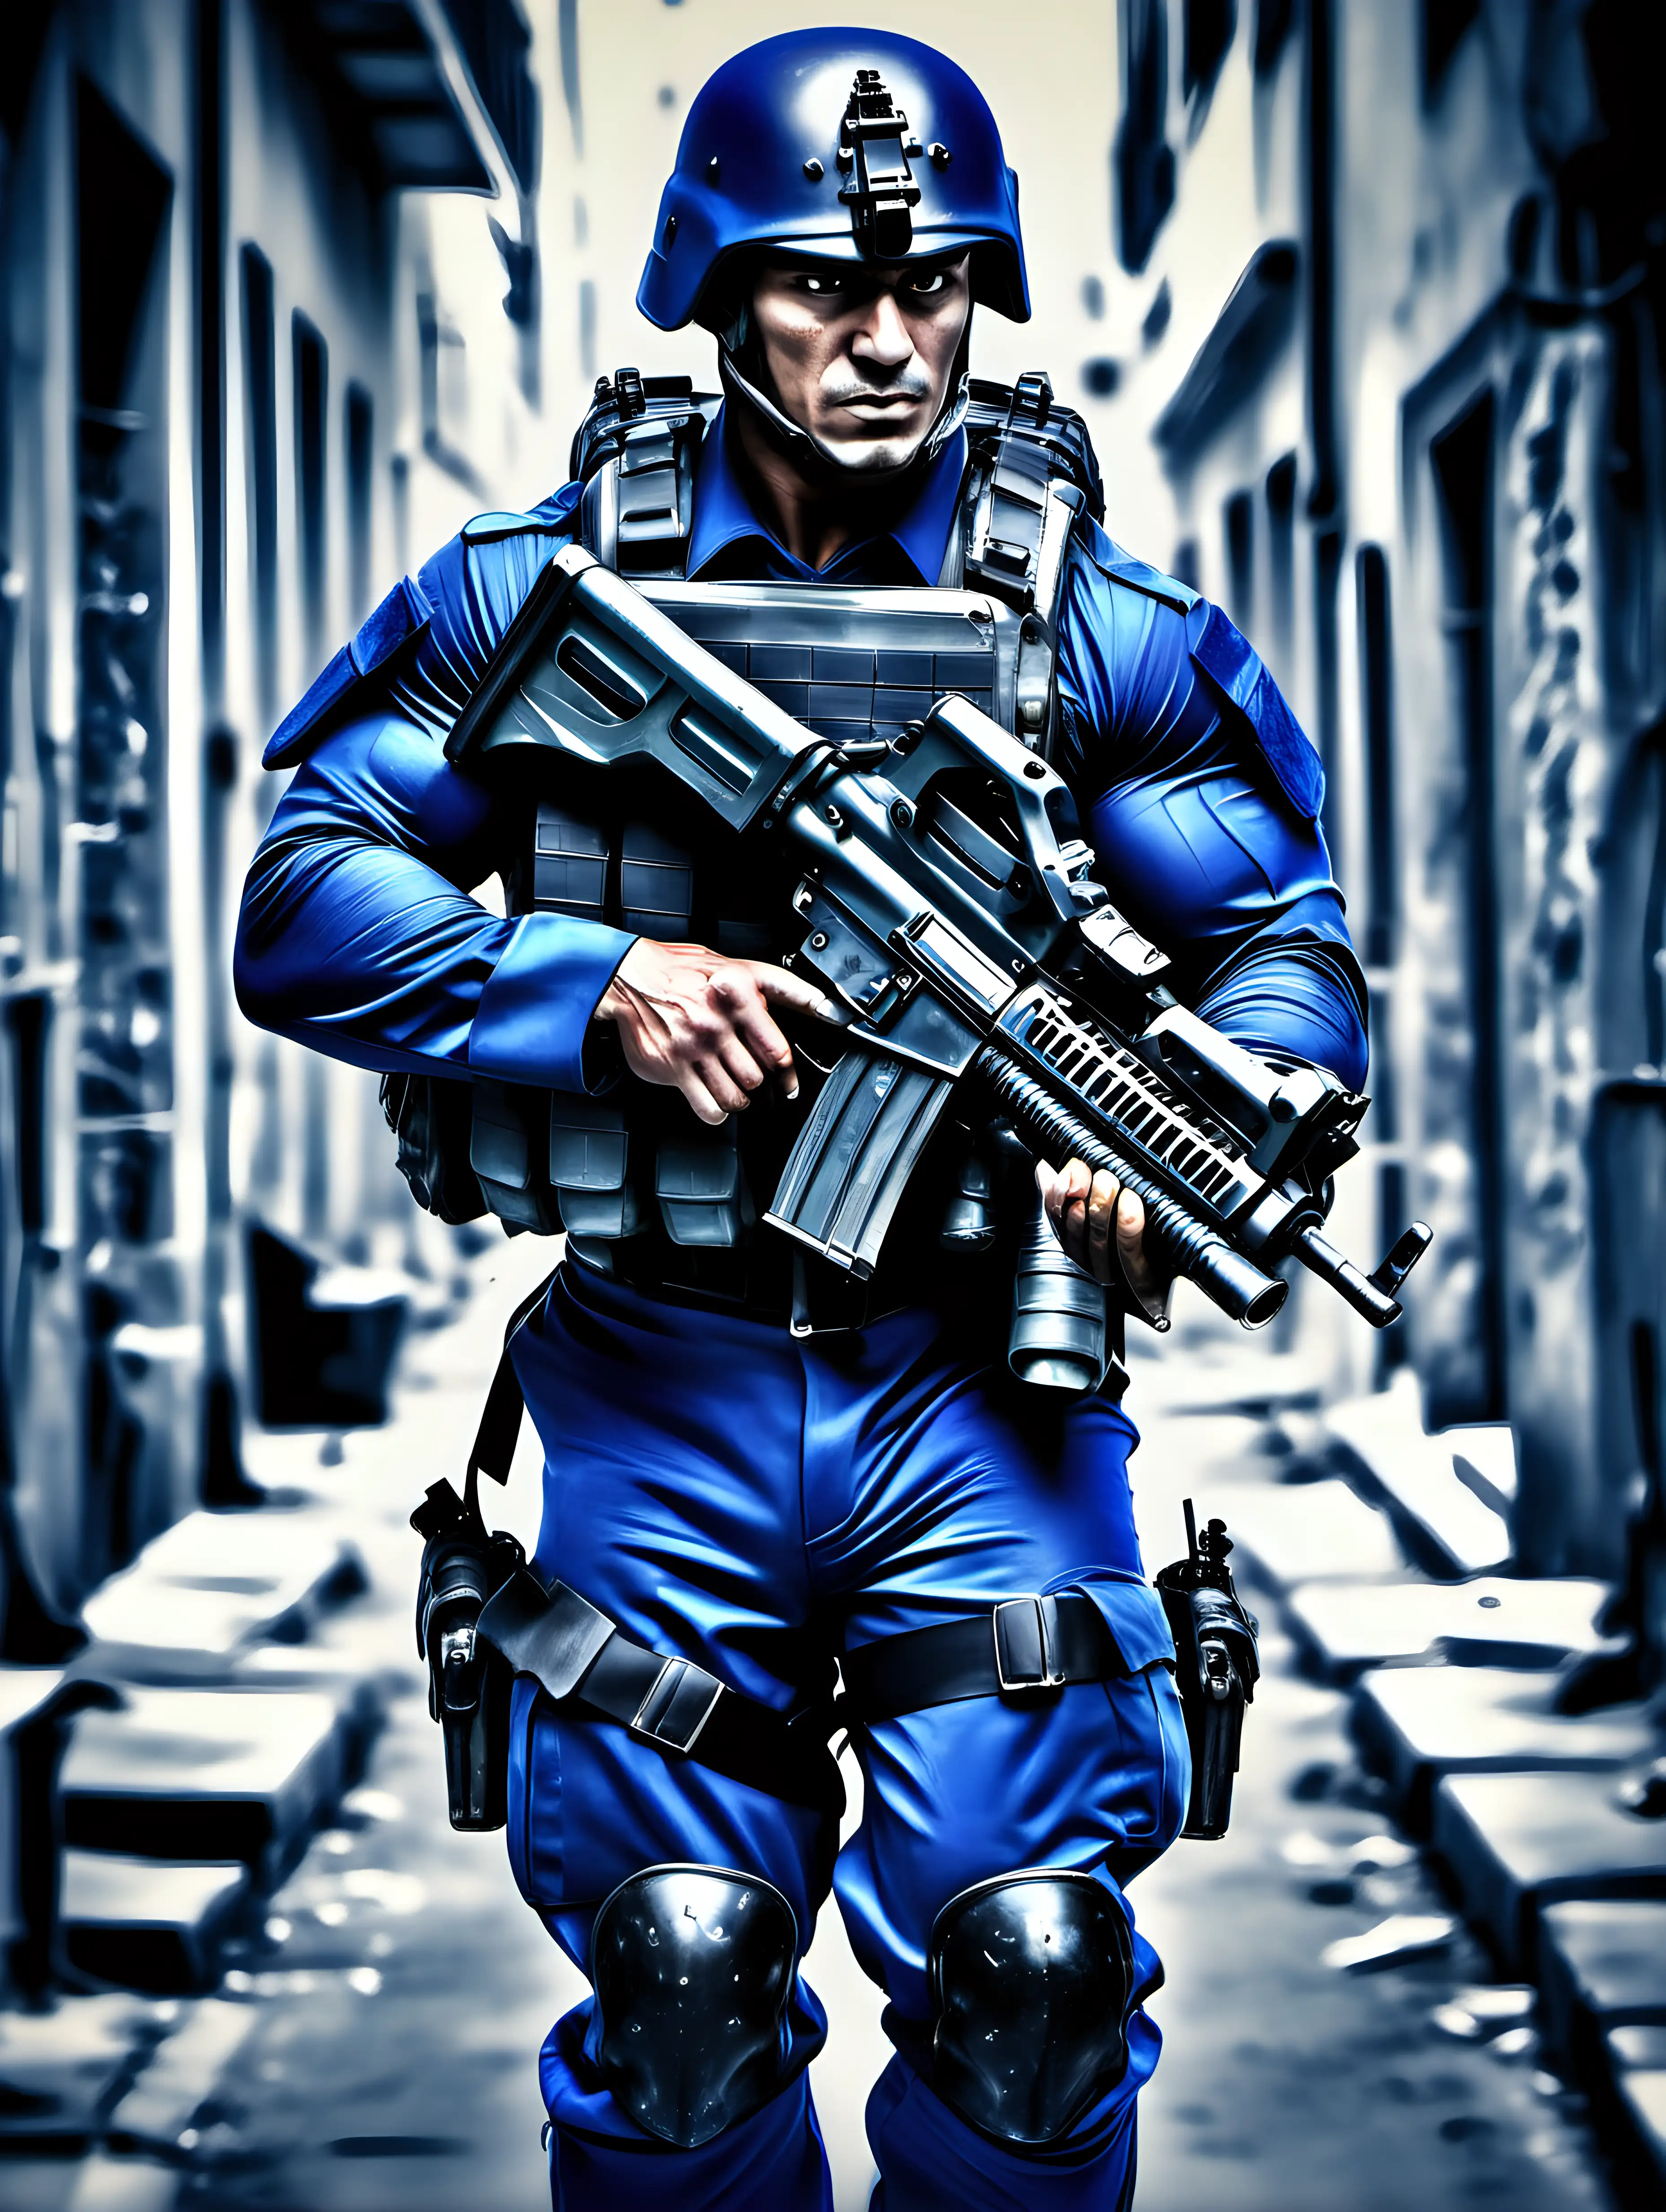 Muscular French Soldier in Blue Combat Uniform with Machine Gun